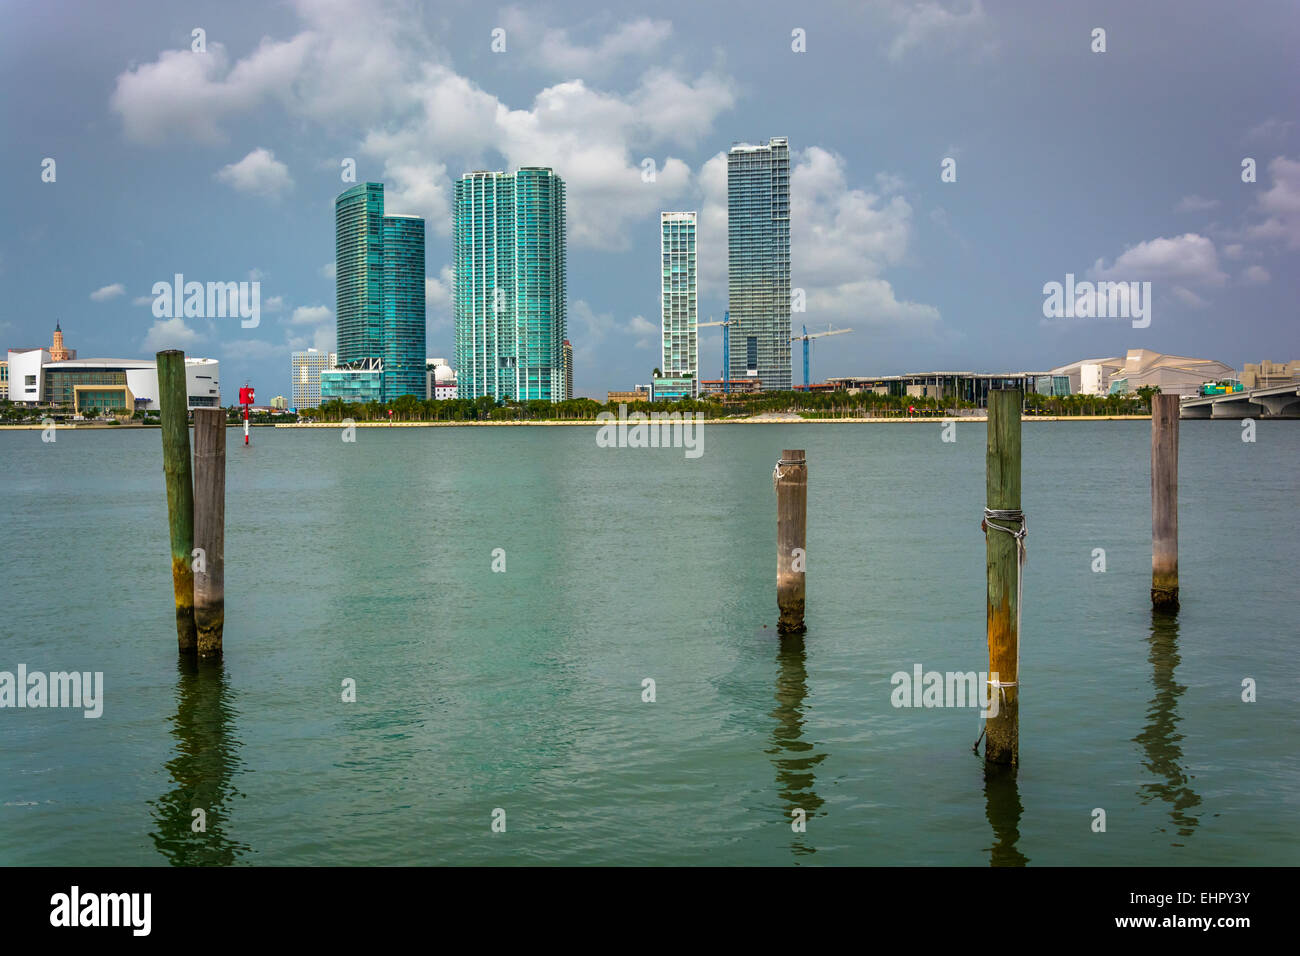 Skyscrapers and dock poles seen at Watson Island Park, Miami, Florida. Stock Photo